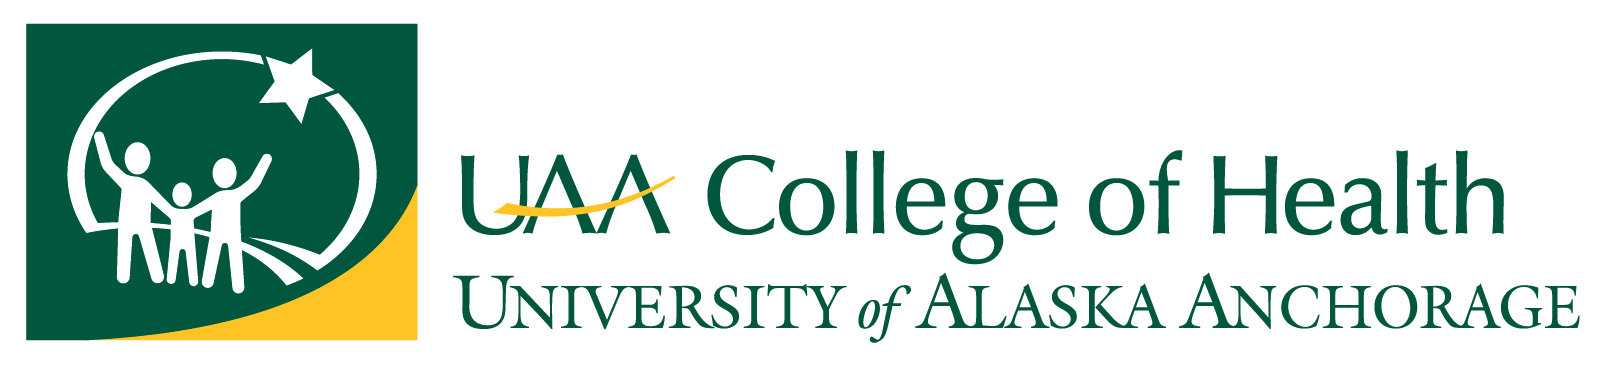 College of Health University of Alaska Anchorage